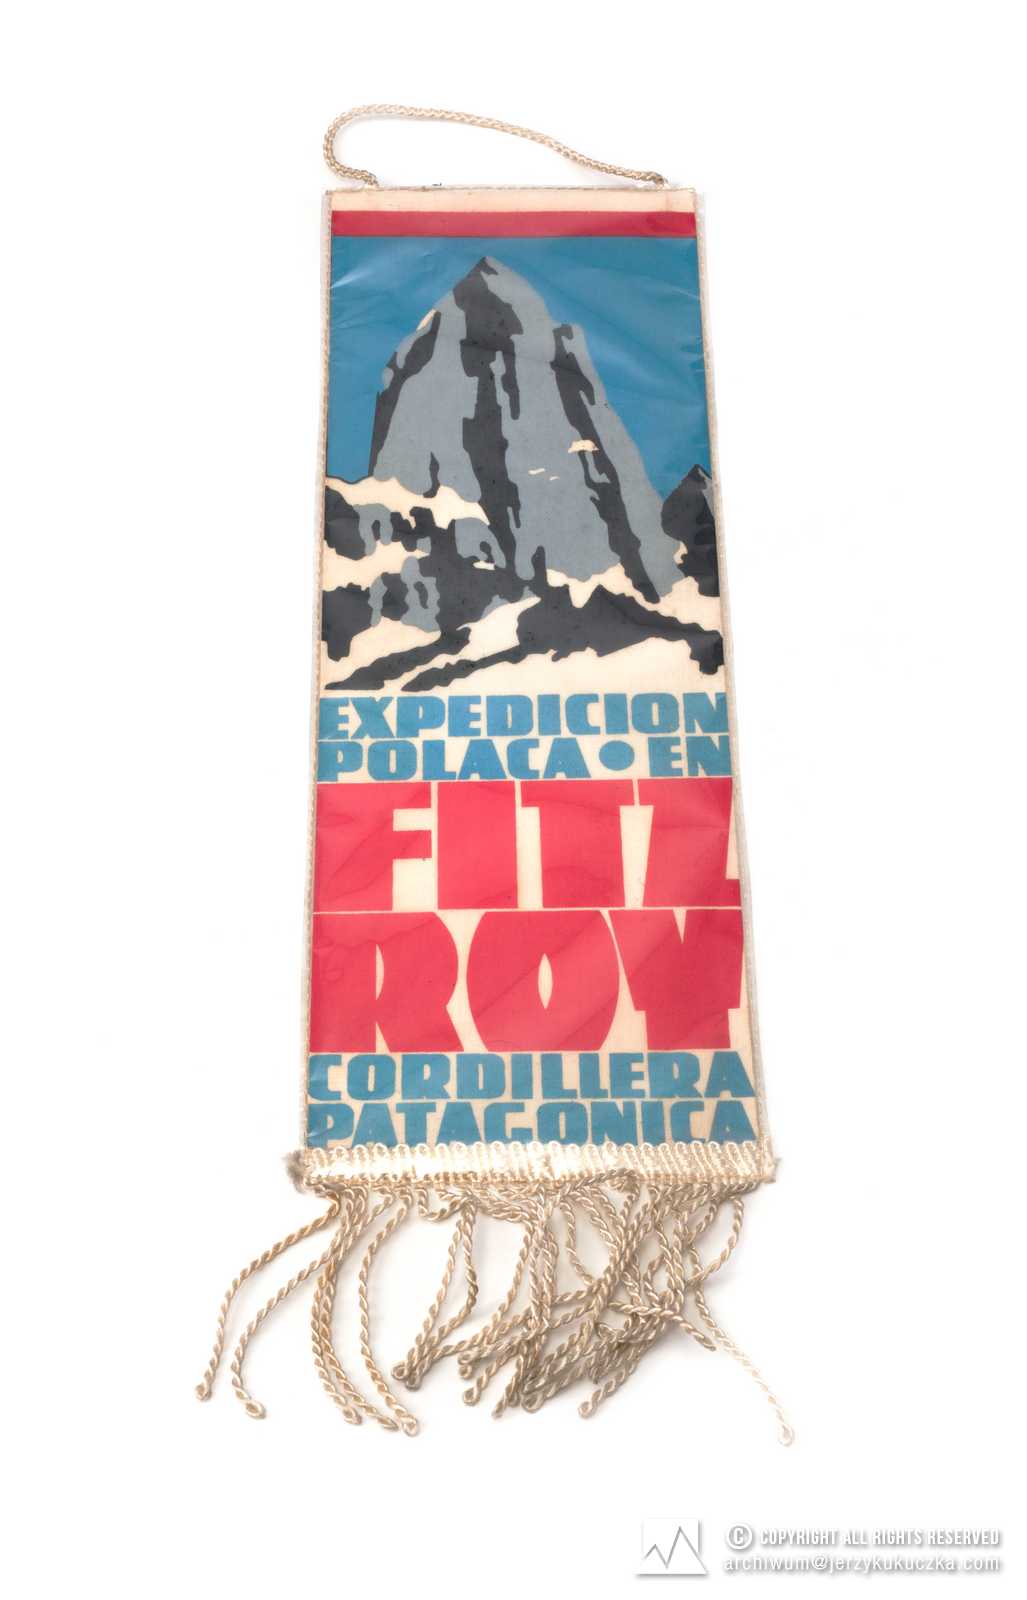 proporczyk Expedicion Polaca en Fitzroy, Cordillera Patagonica i flaga Polski [Wyprawa na Fitzroy w 1977 r.] prostokątny 1977